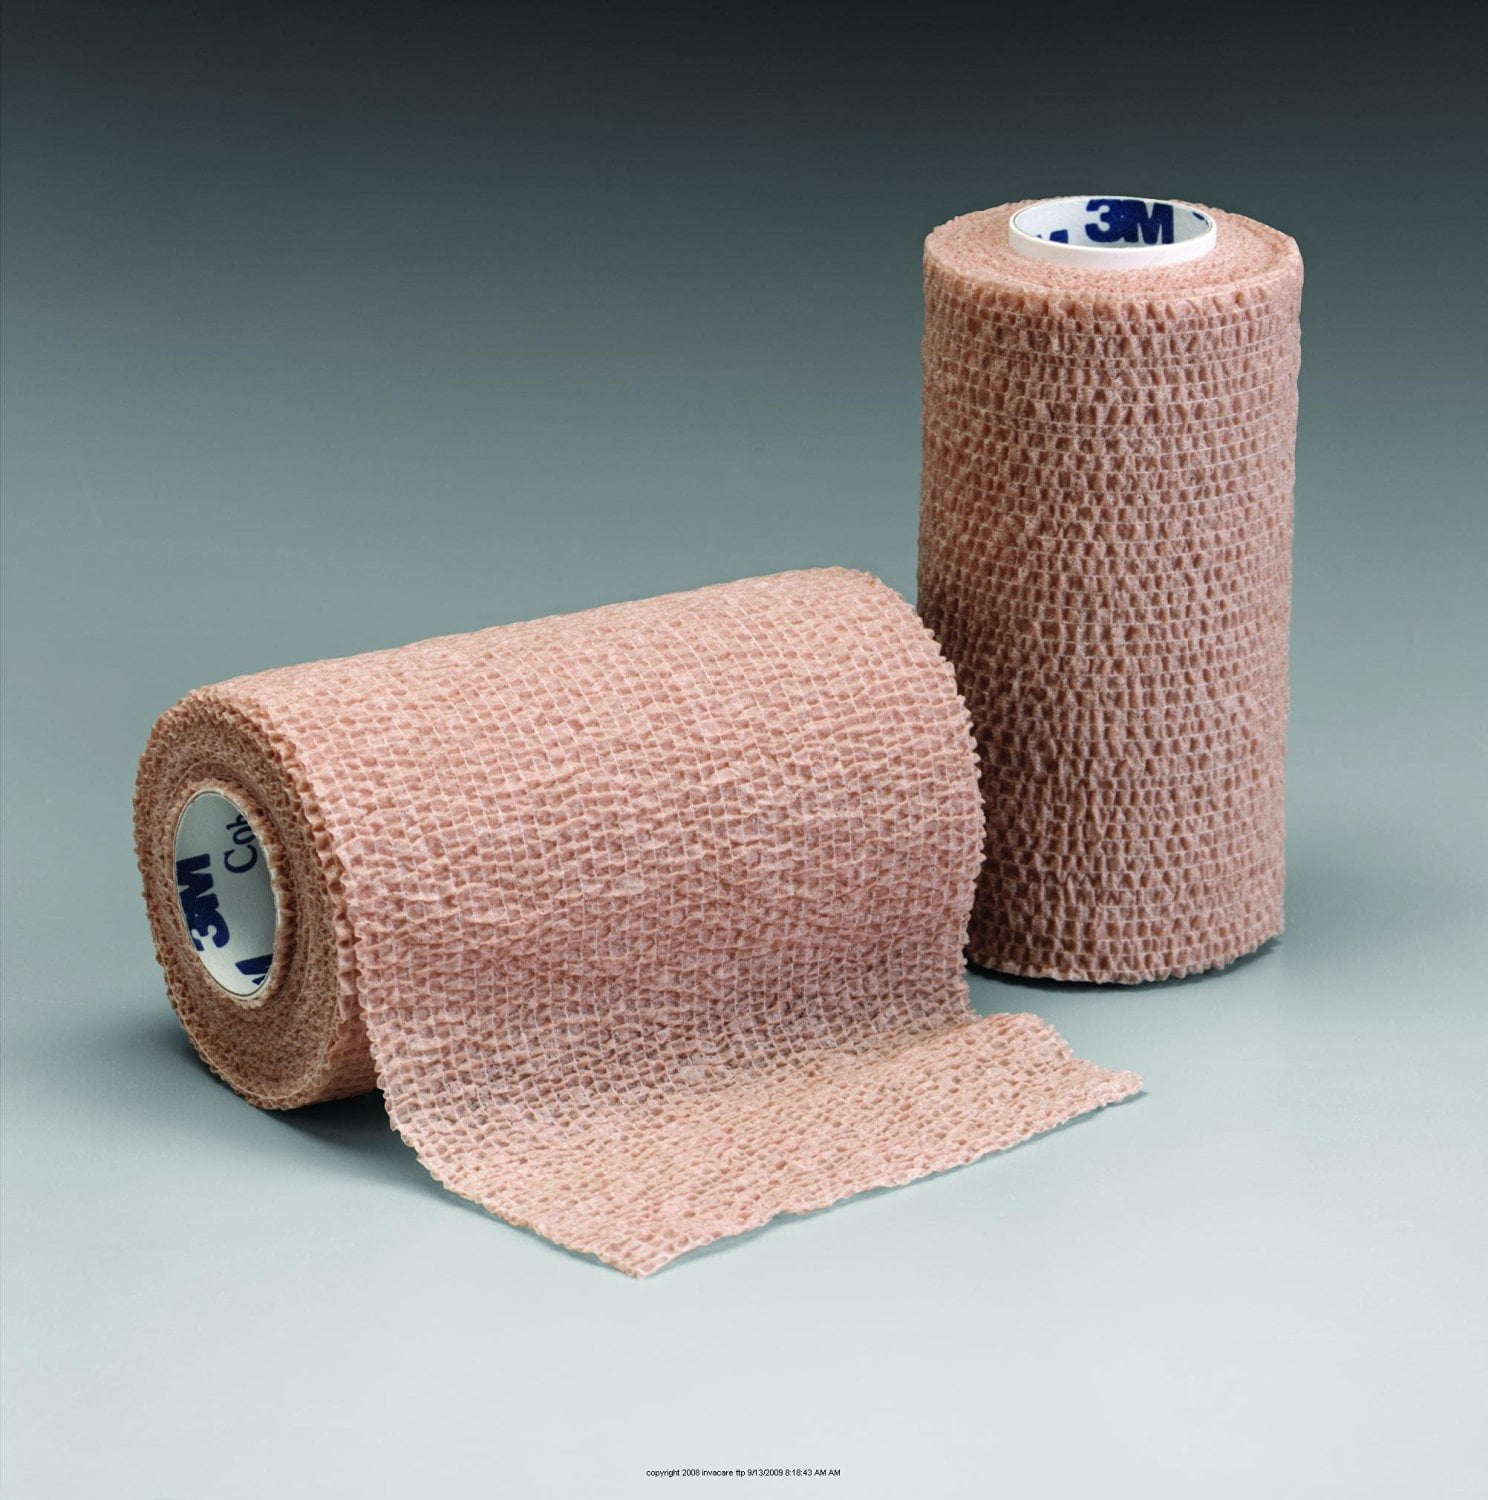 3m-compression-bandage-coban-nonwoven-elastic-fibers-6-x-5-yard